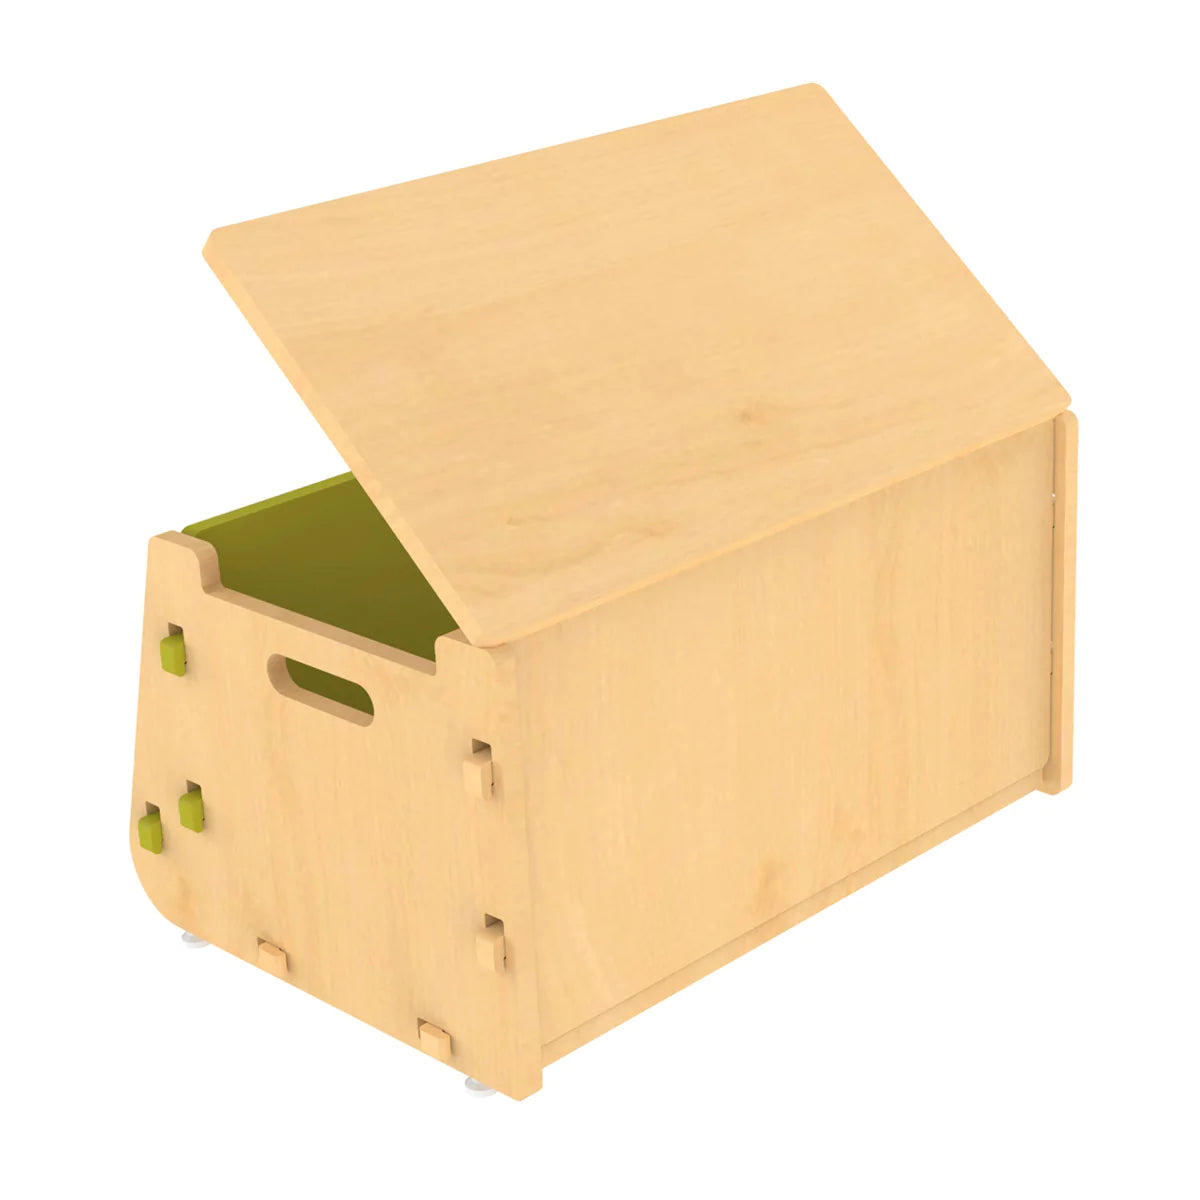 Buy Aqua Plum Toy Chest - Storage  Box - Green - Back View - SkilloToys.com